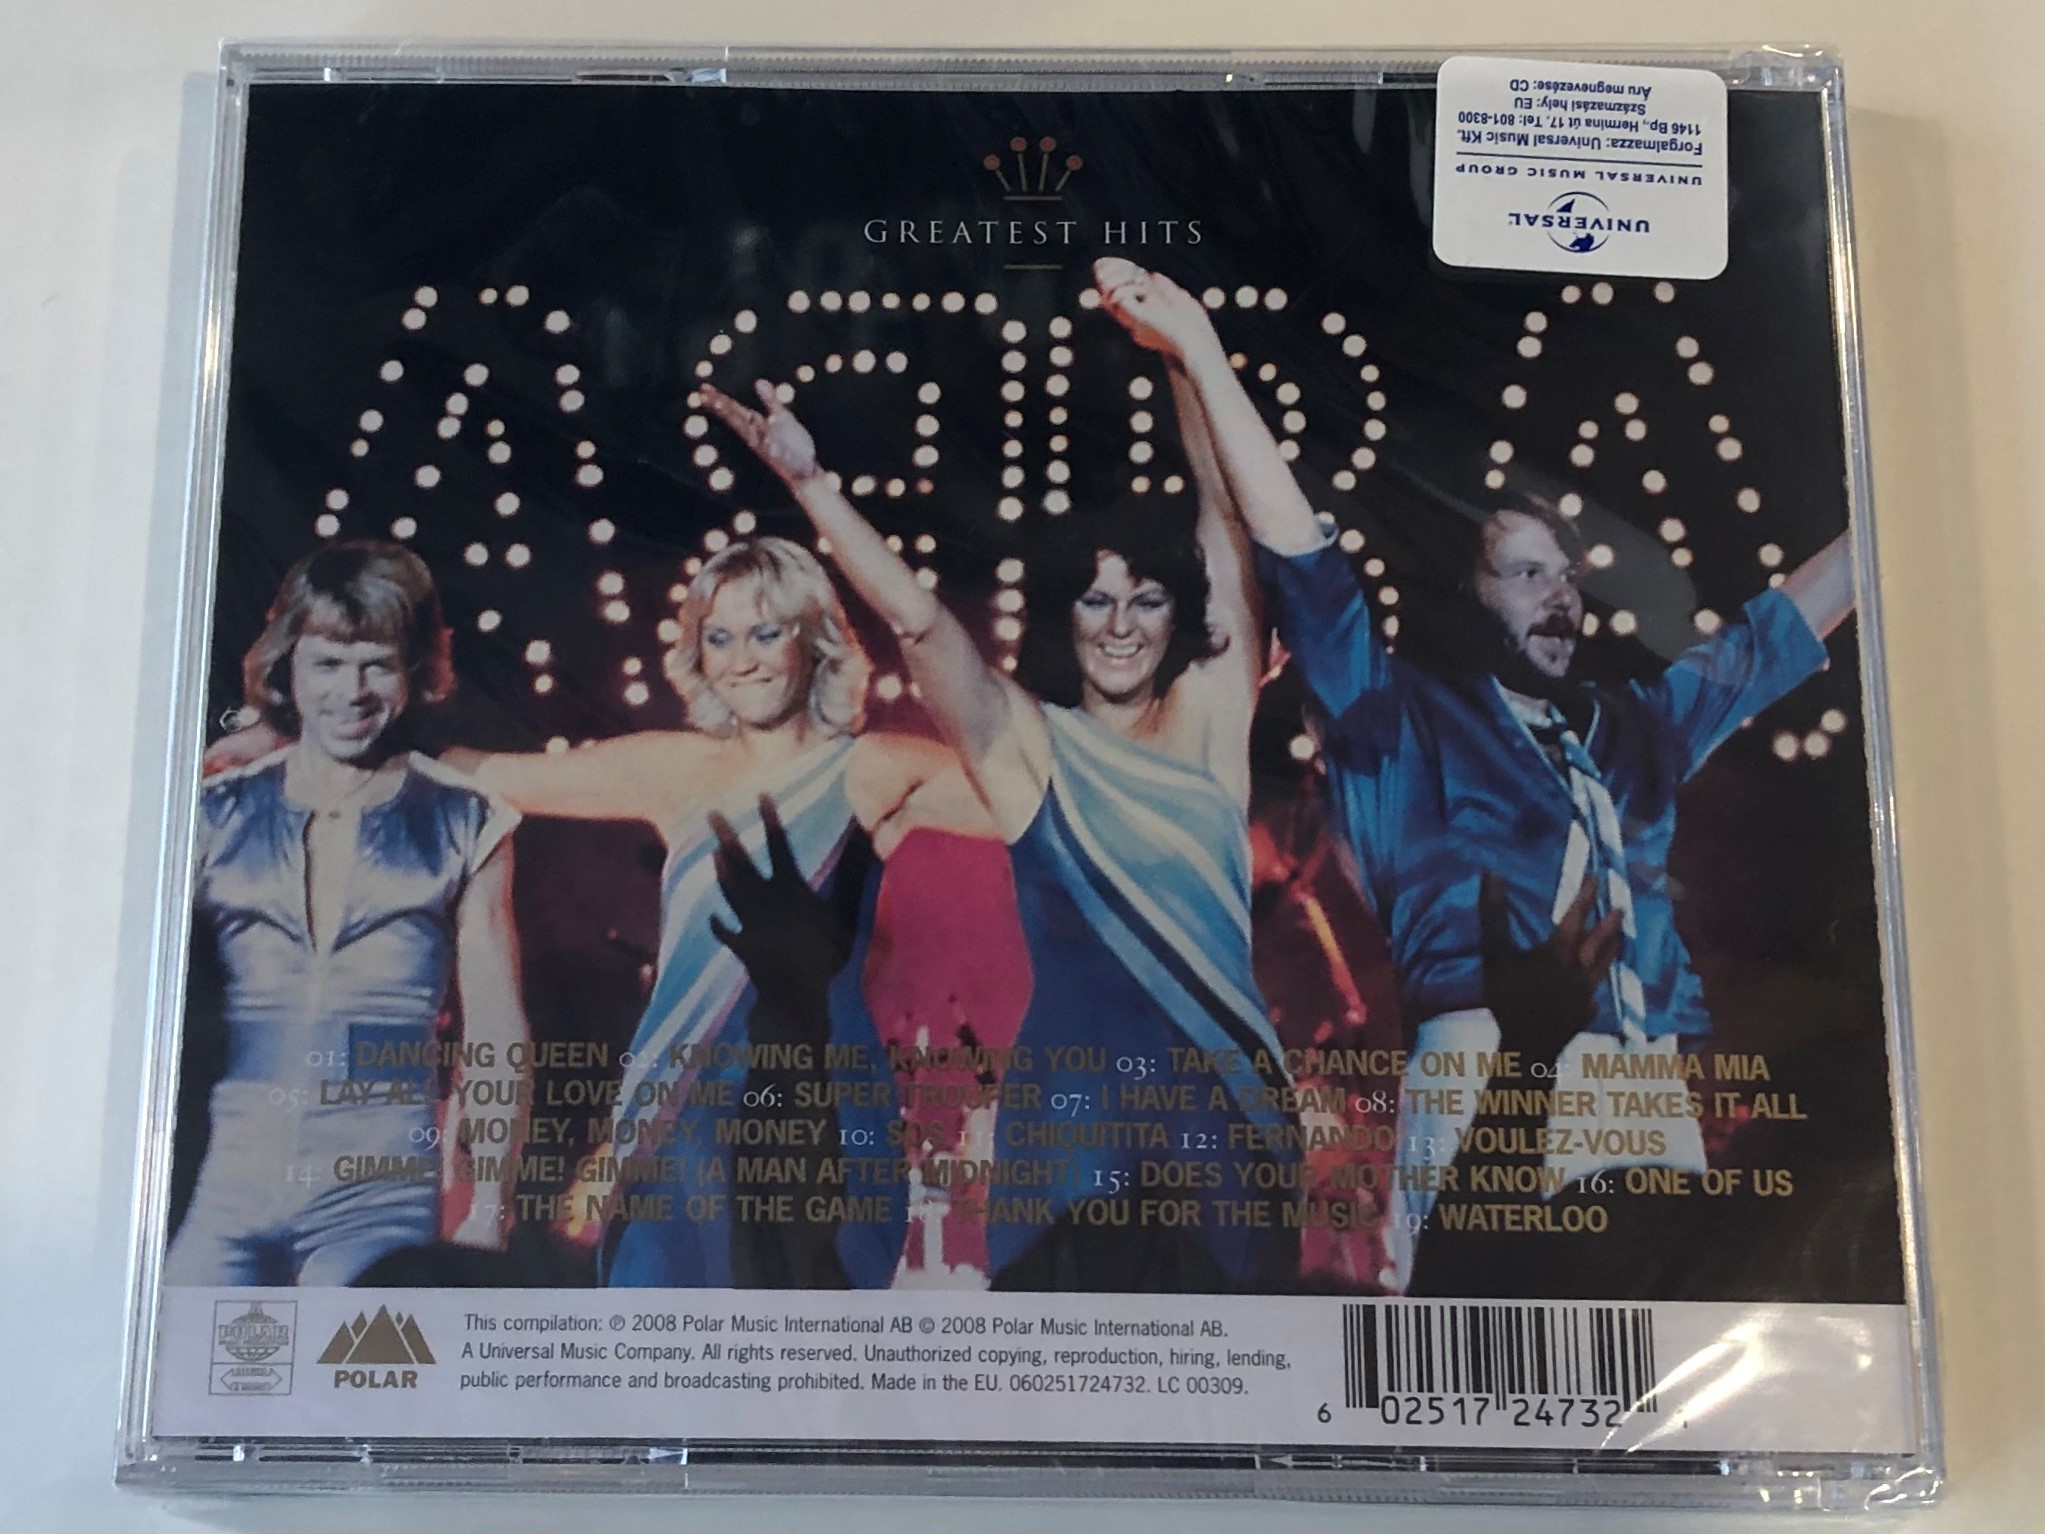 abba-gold-greatest-hits-polar-audio-cd-2008-060251724732-2-.jpg